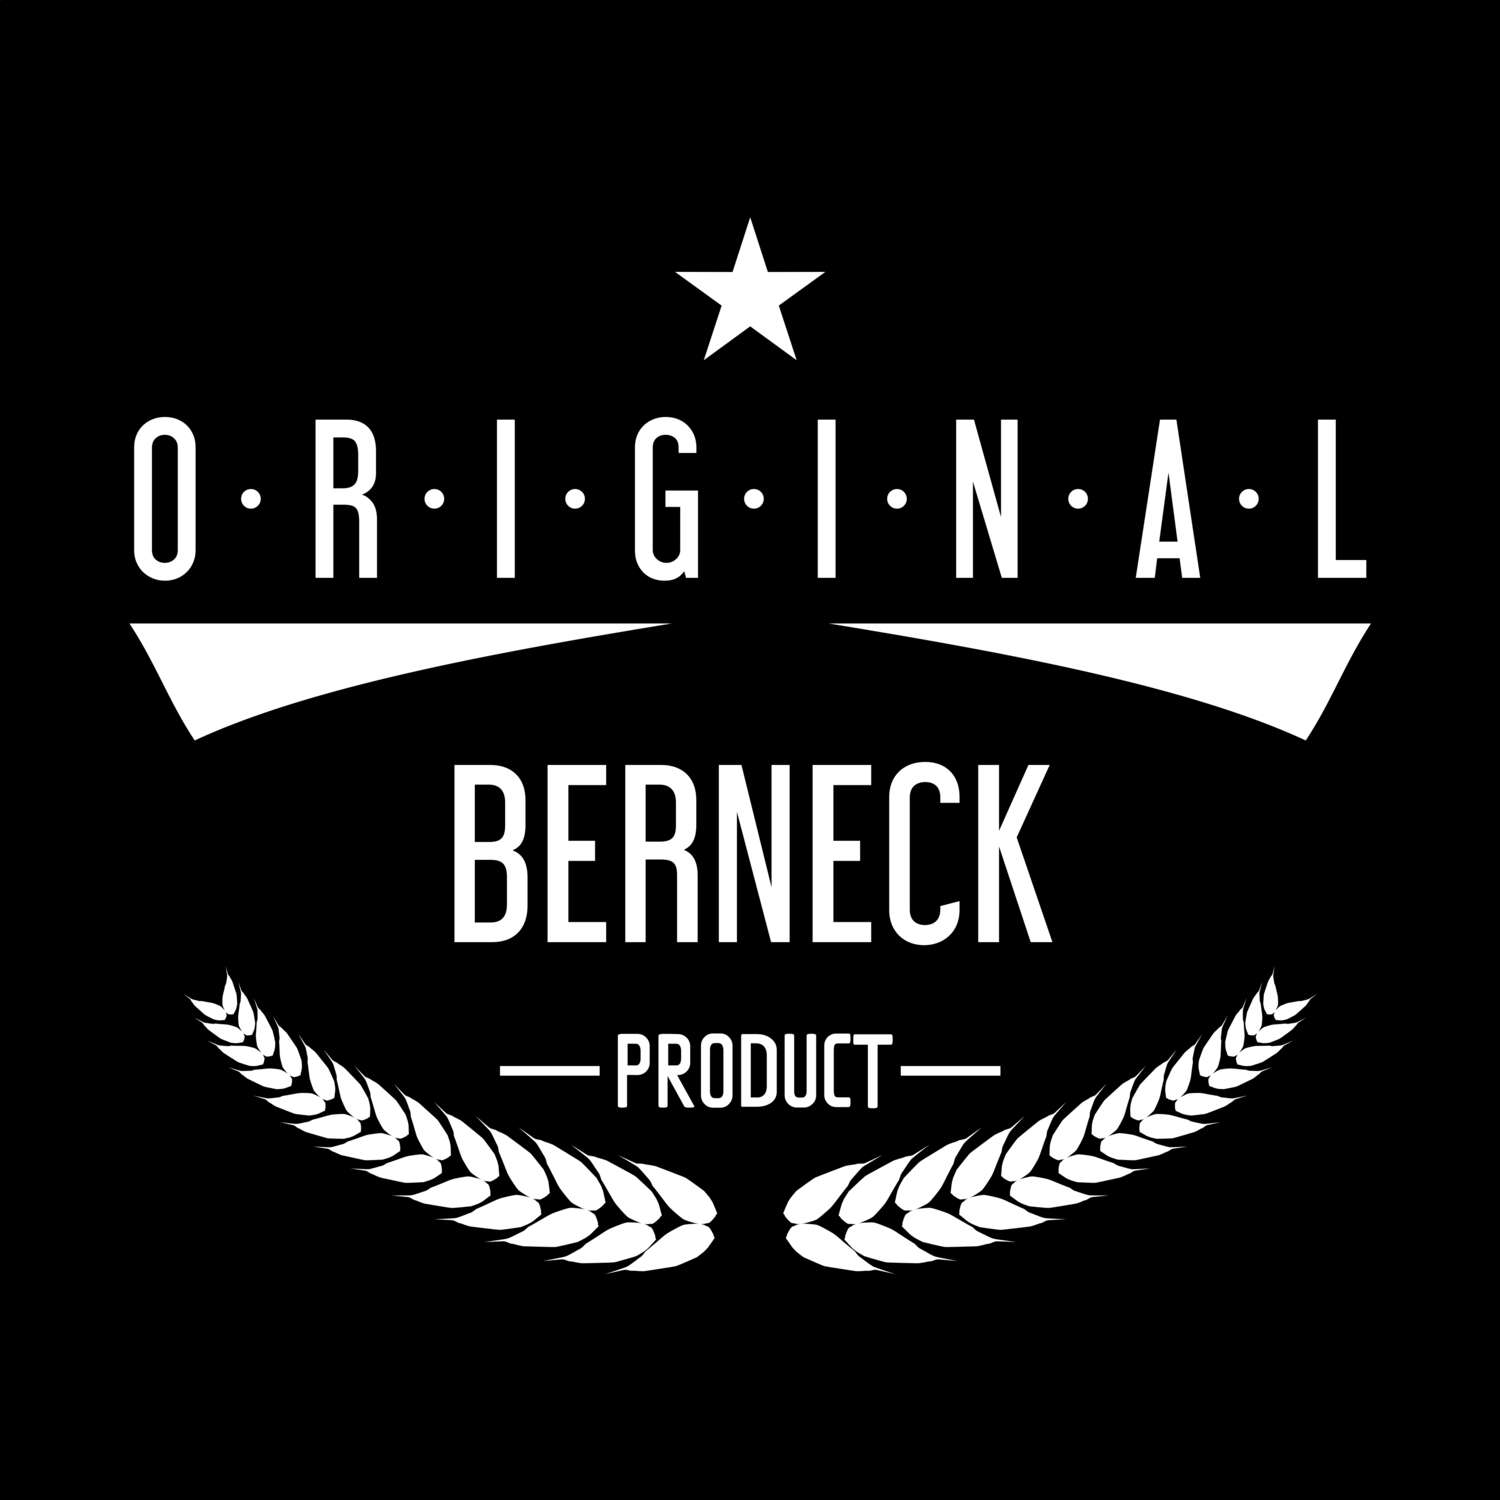 Berneck T-Shirt »Original Product«